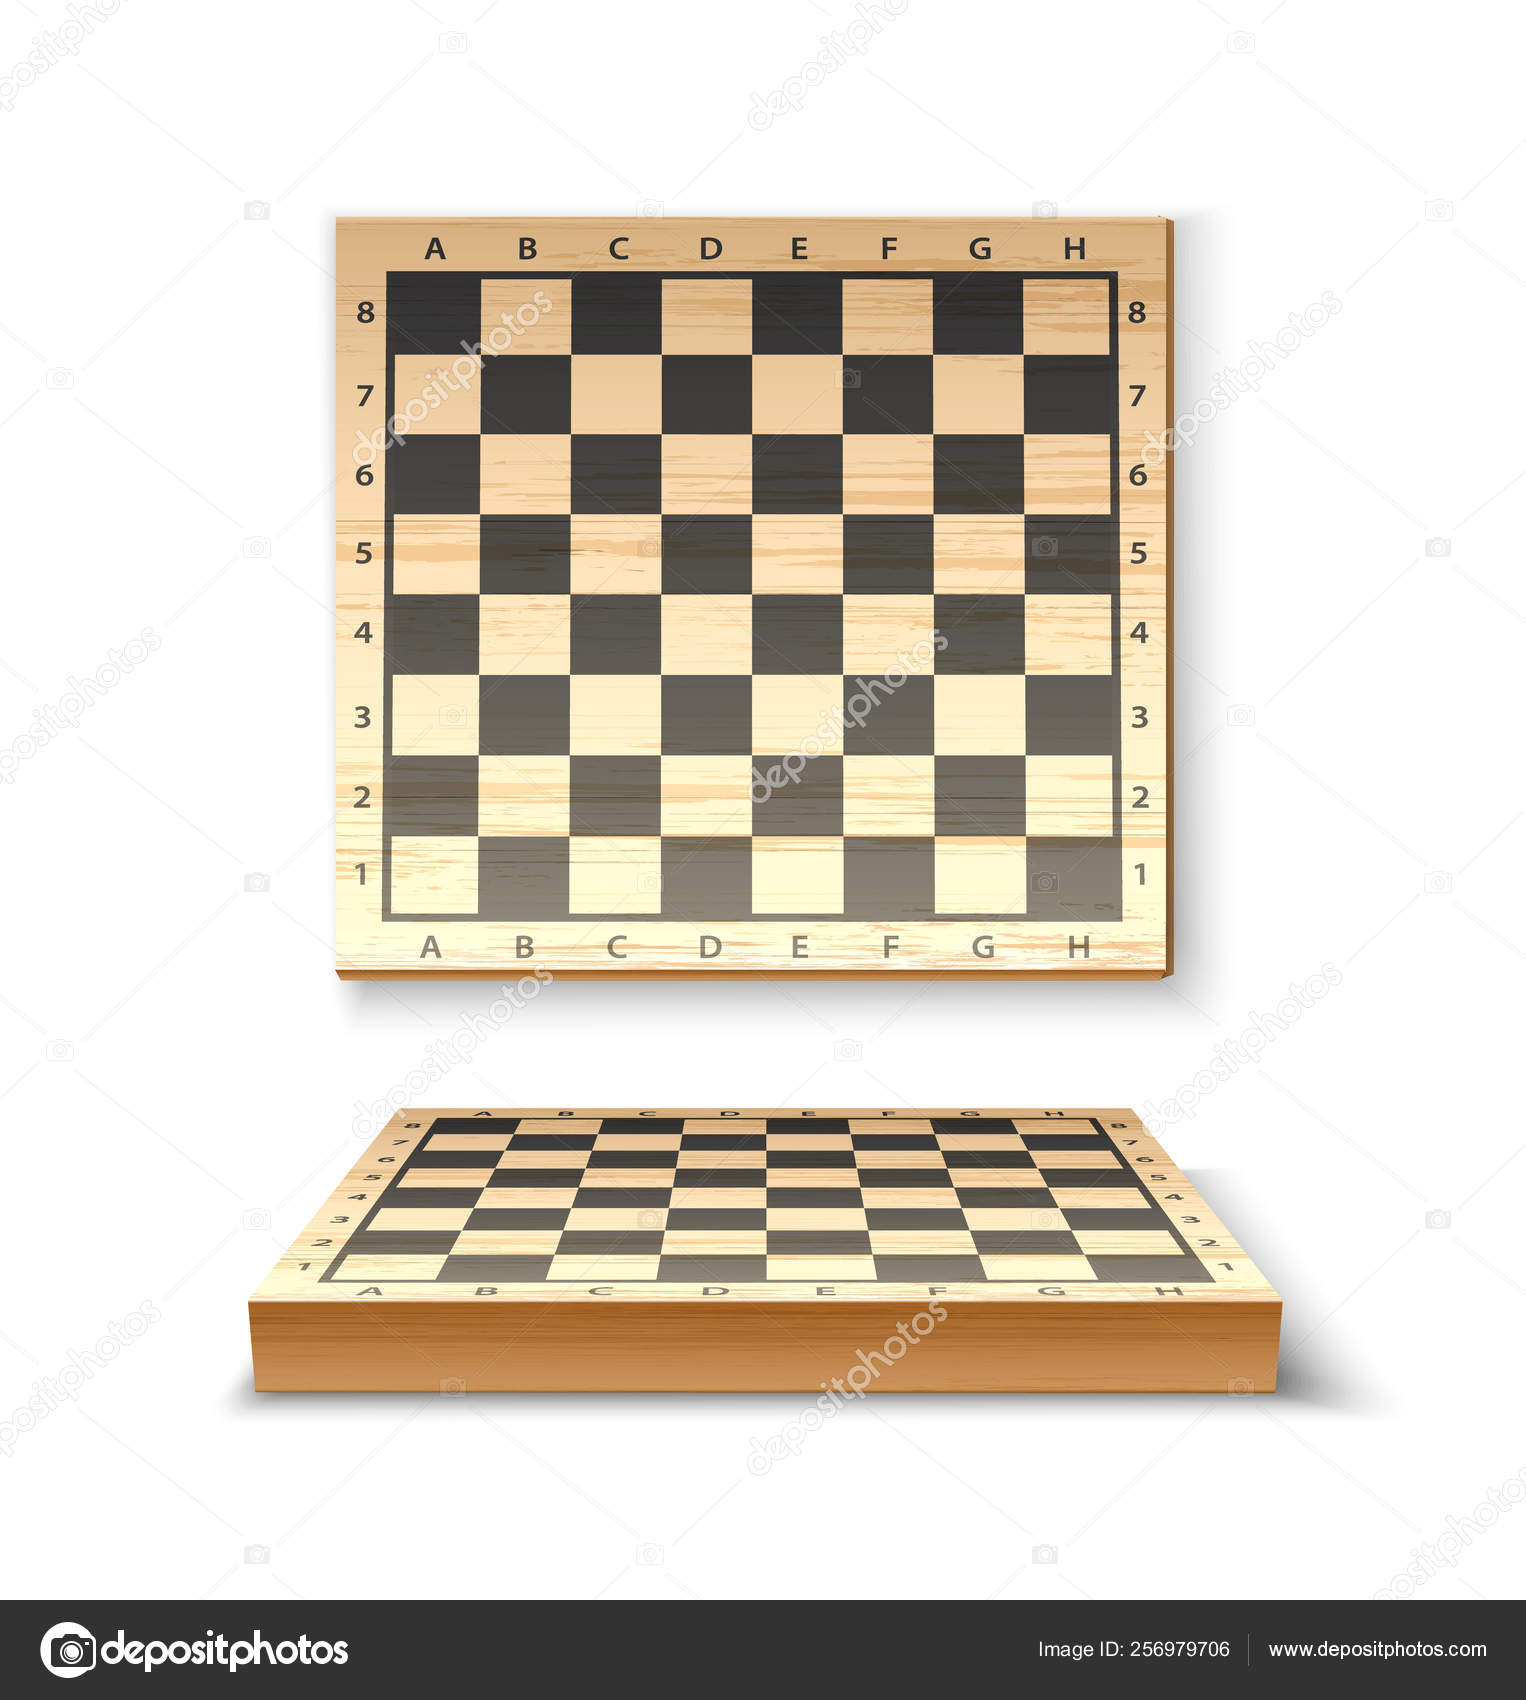 Tabuleiro de xadrez e peças de xadrez 3d vector ilustração